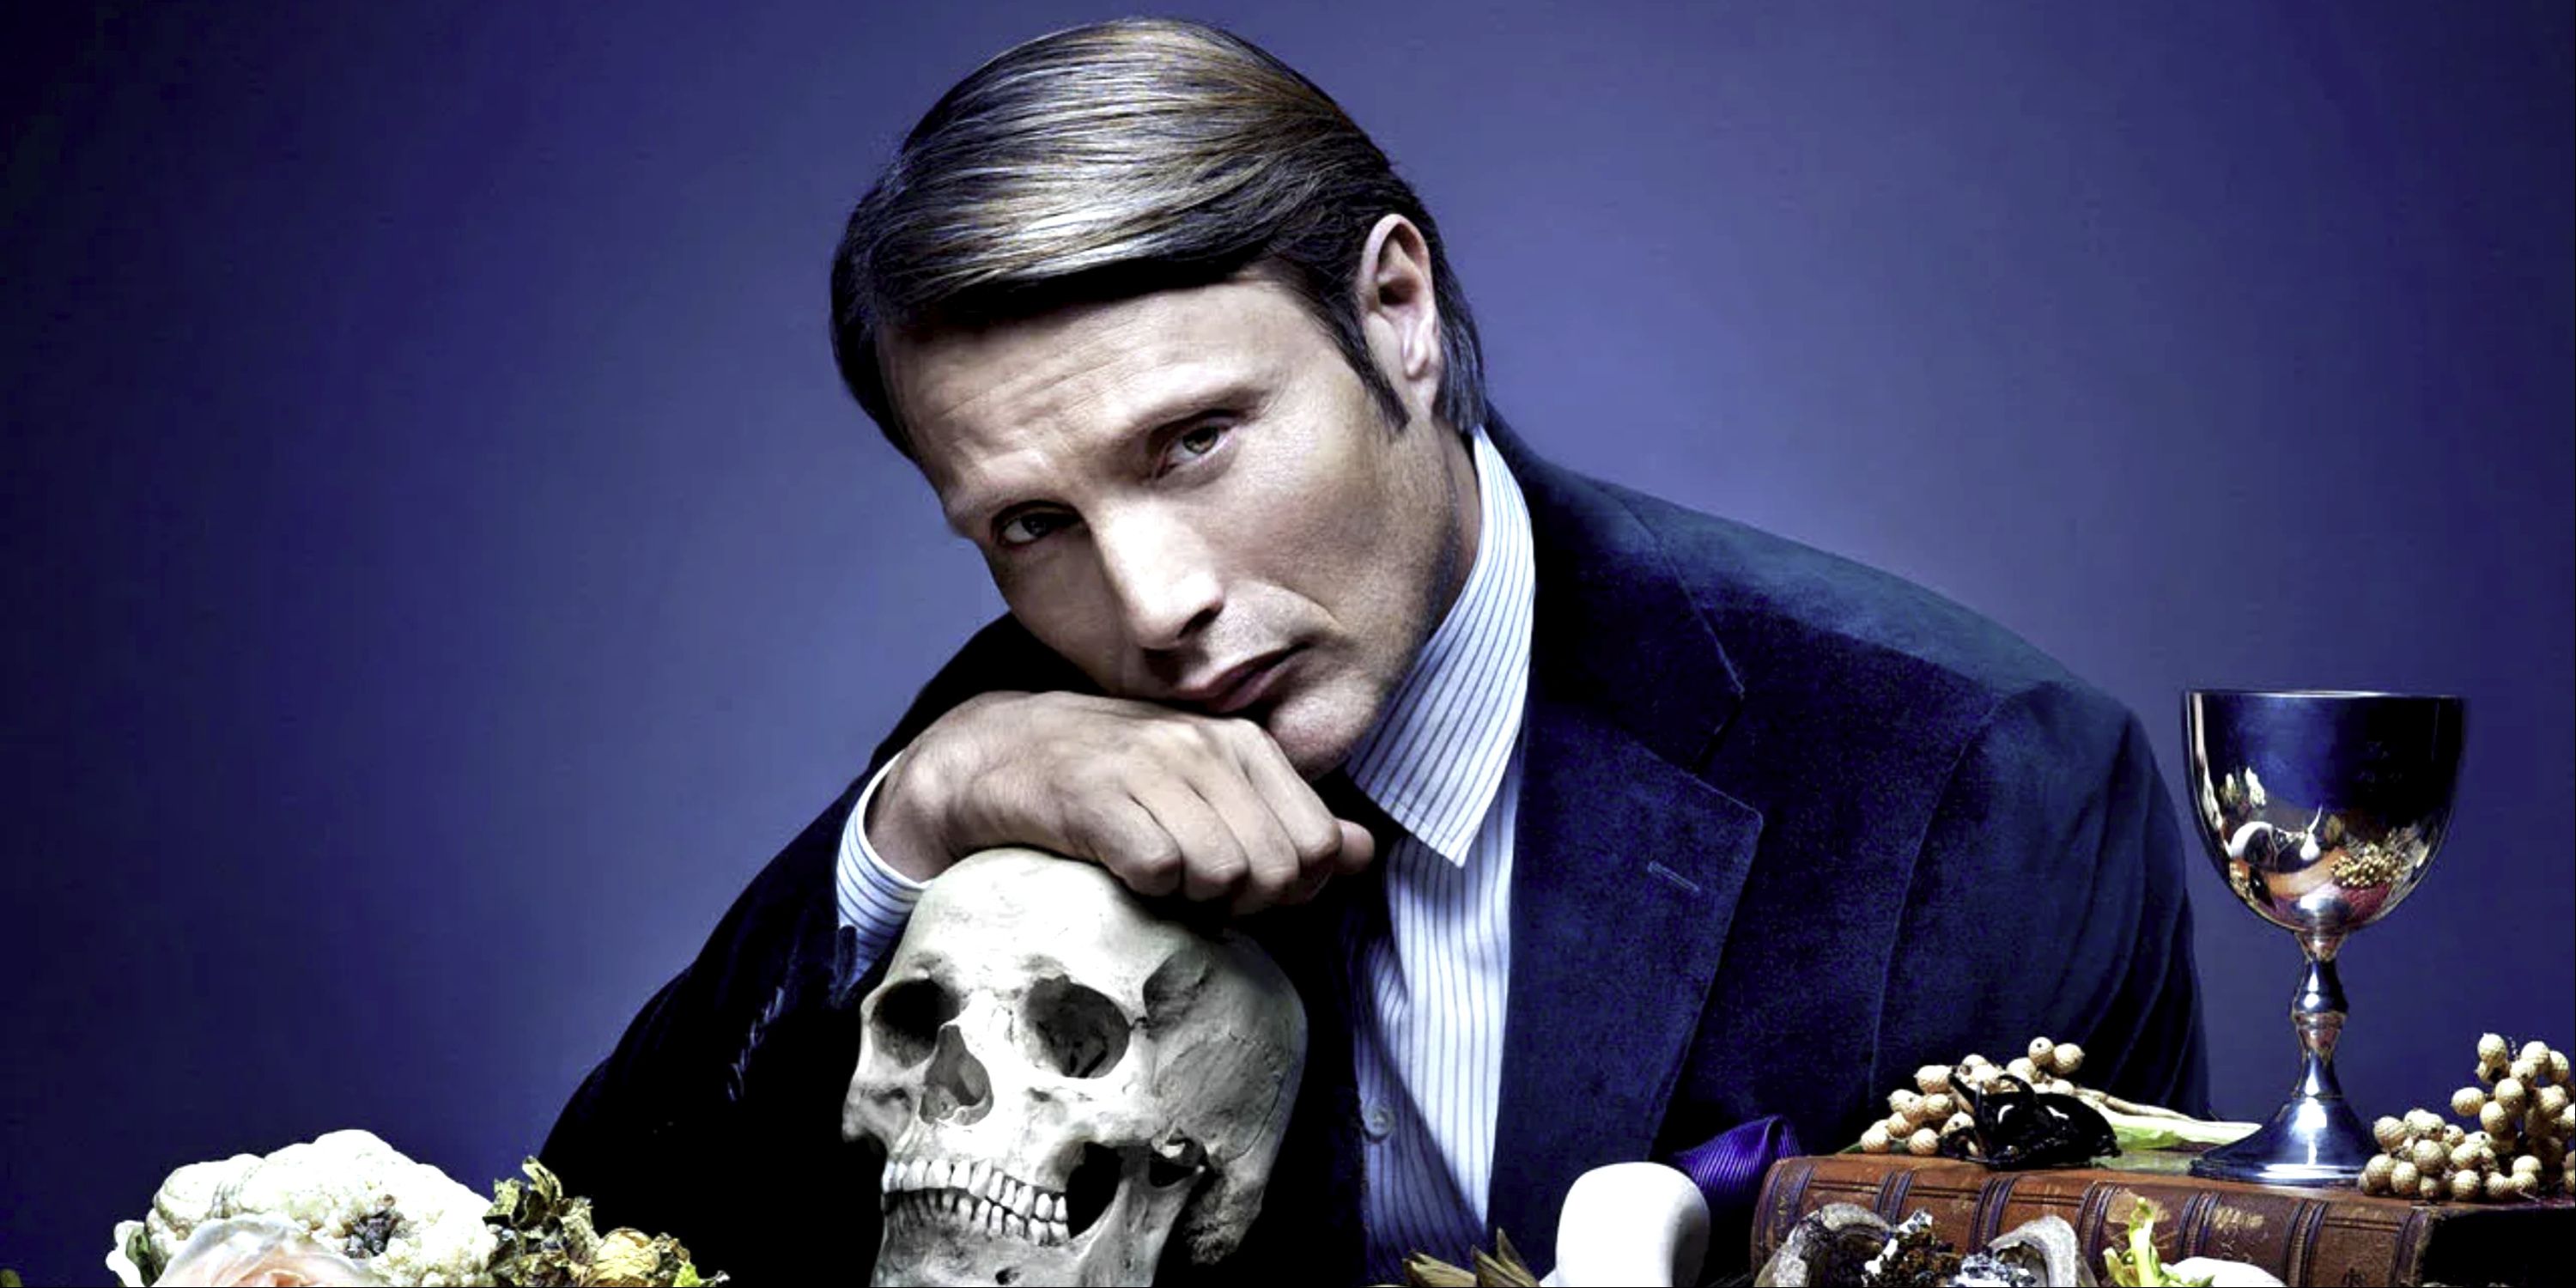 Mads Mikkelsen as Hannibal Lecter leans on a skull at the dinner table.